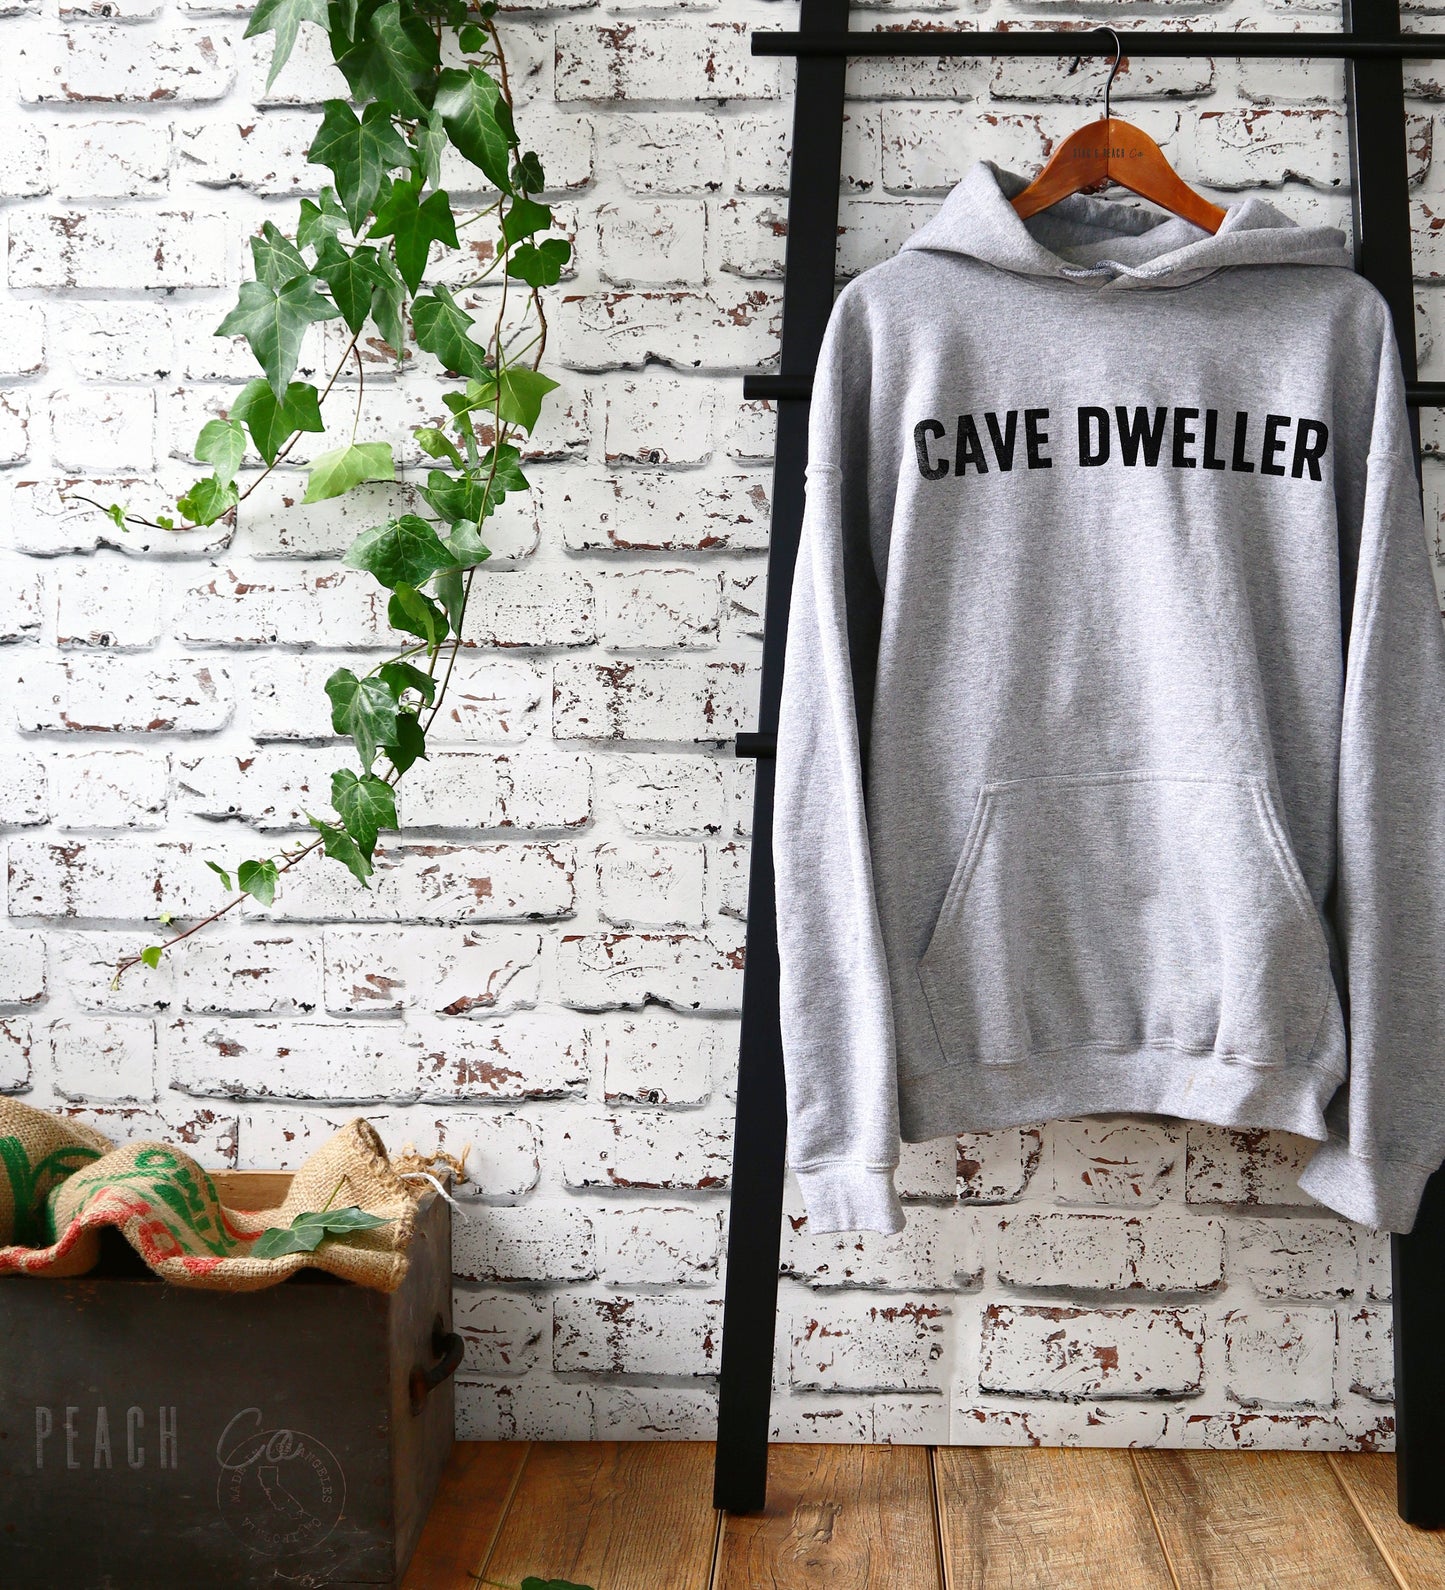 Cave Dweller Hoodie - Caving Shirt, Spelunking Shirt, Caver Shirt, Spelunker Shirt, Adventure Shirt, Hiking Shirt, Cave Diving Shirt